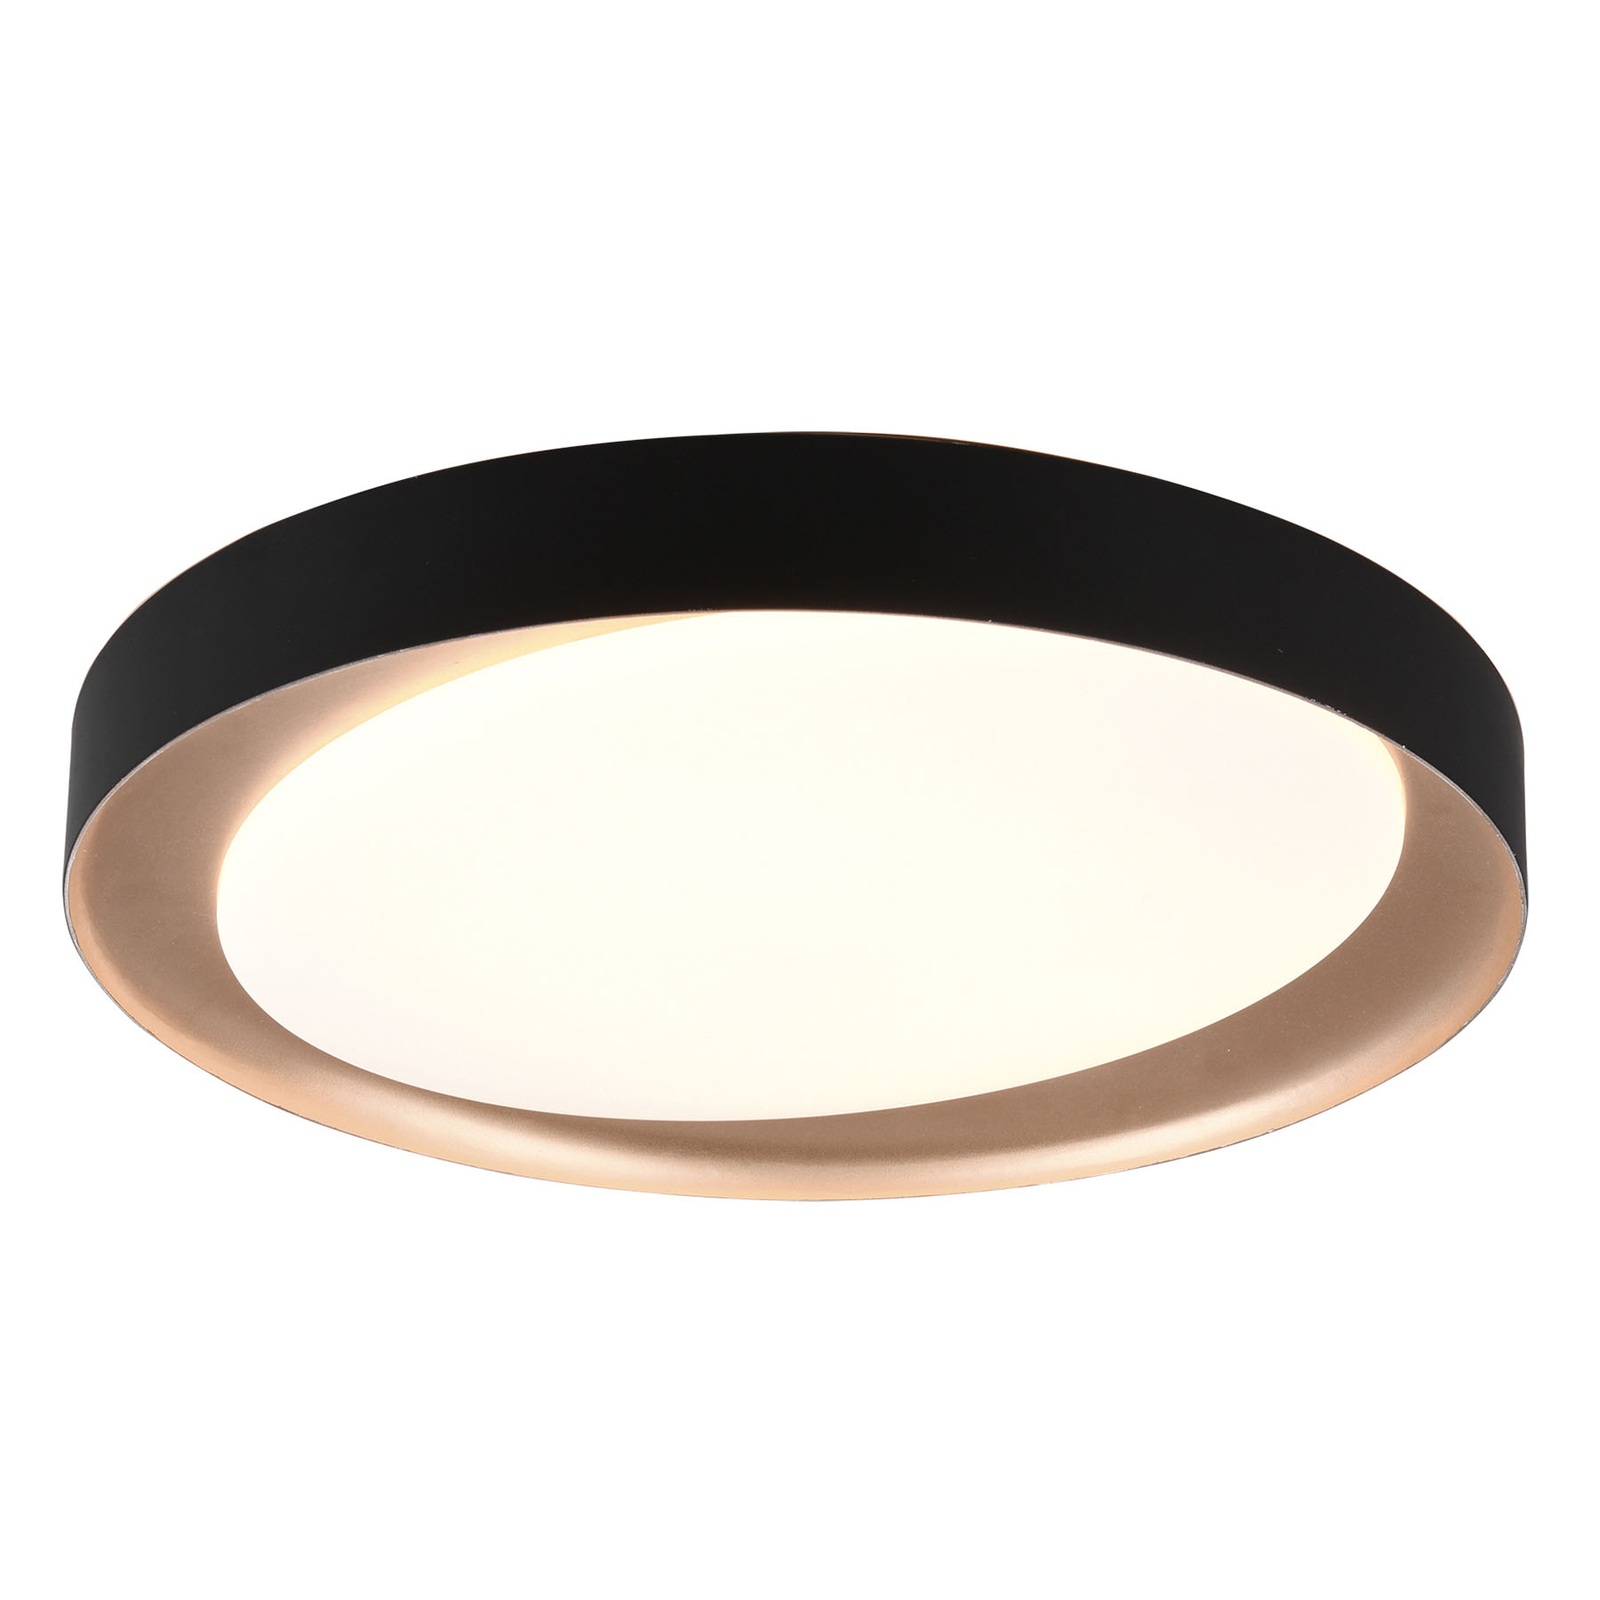 LED-taklampe Zeta tunable white, svart/gull